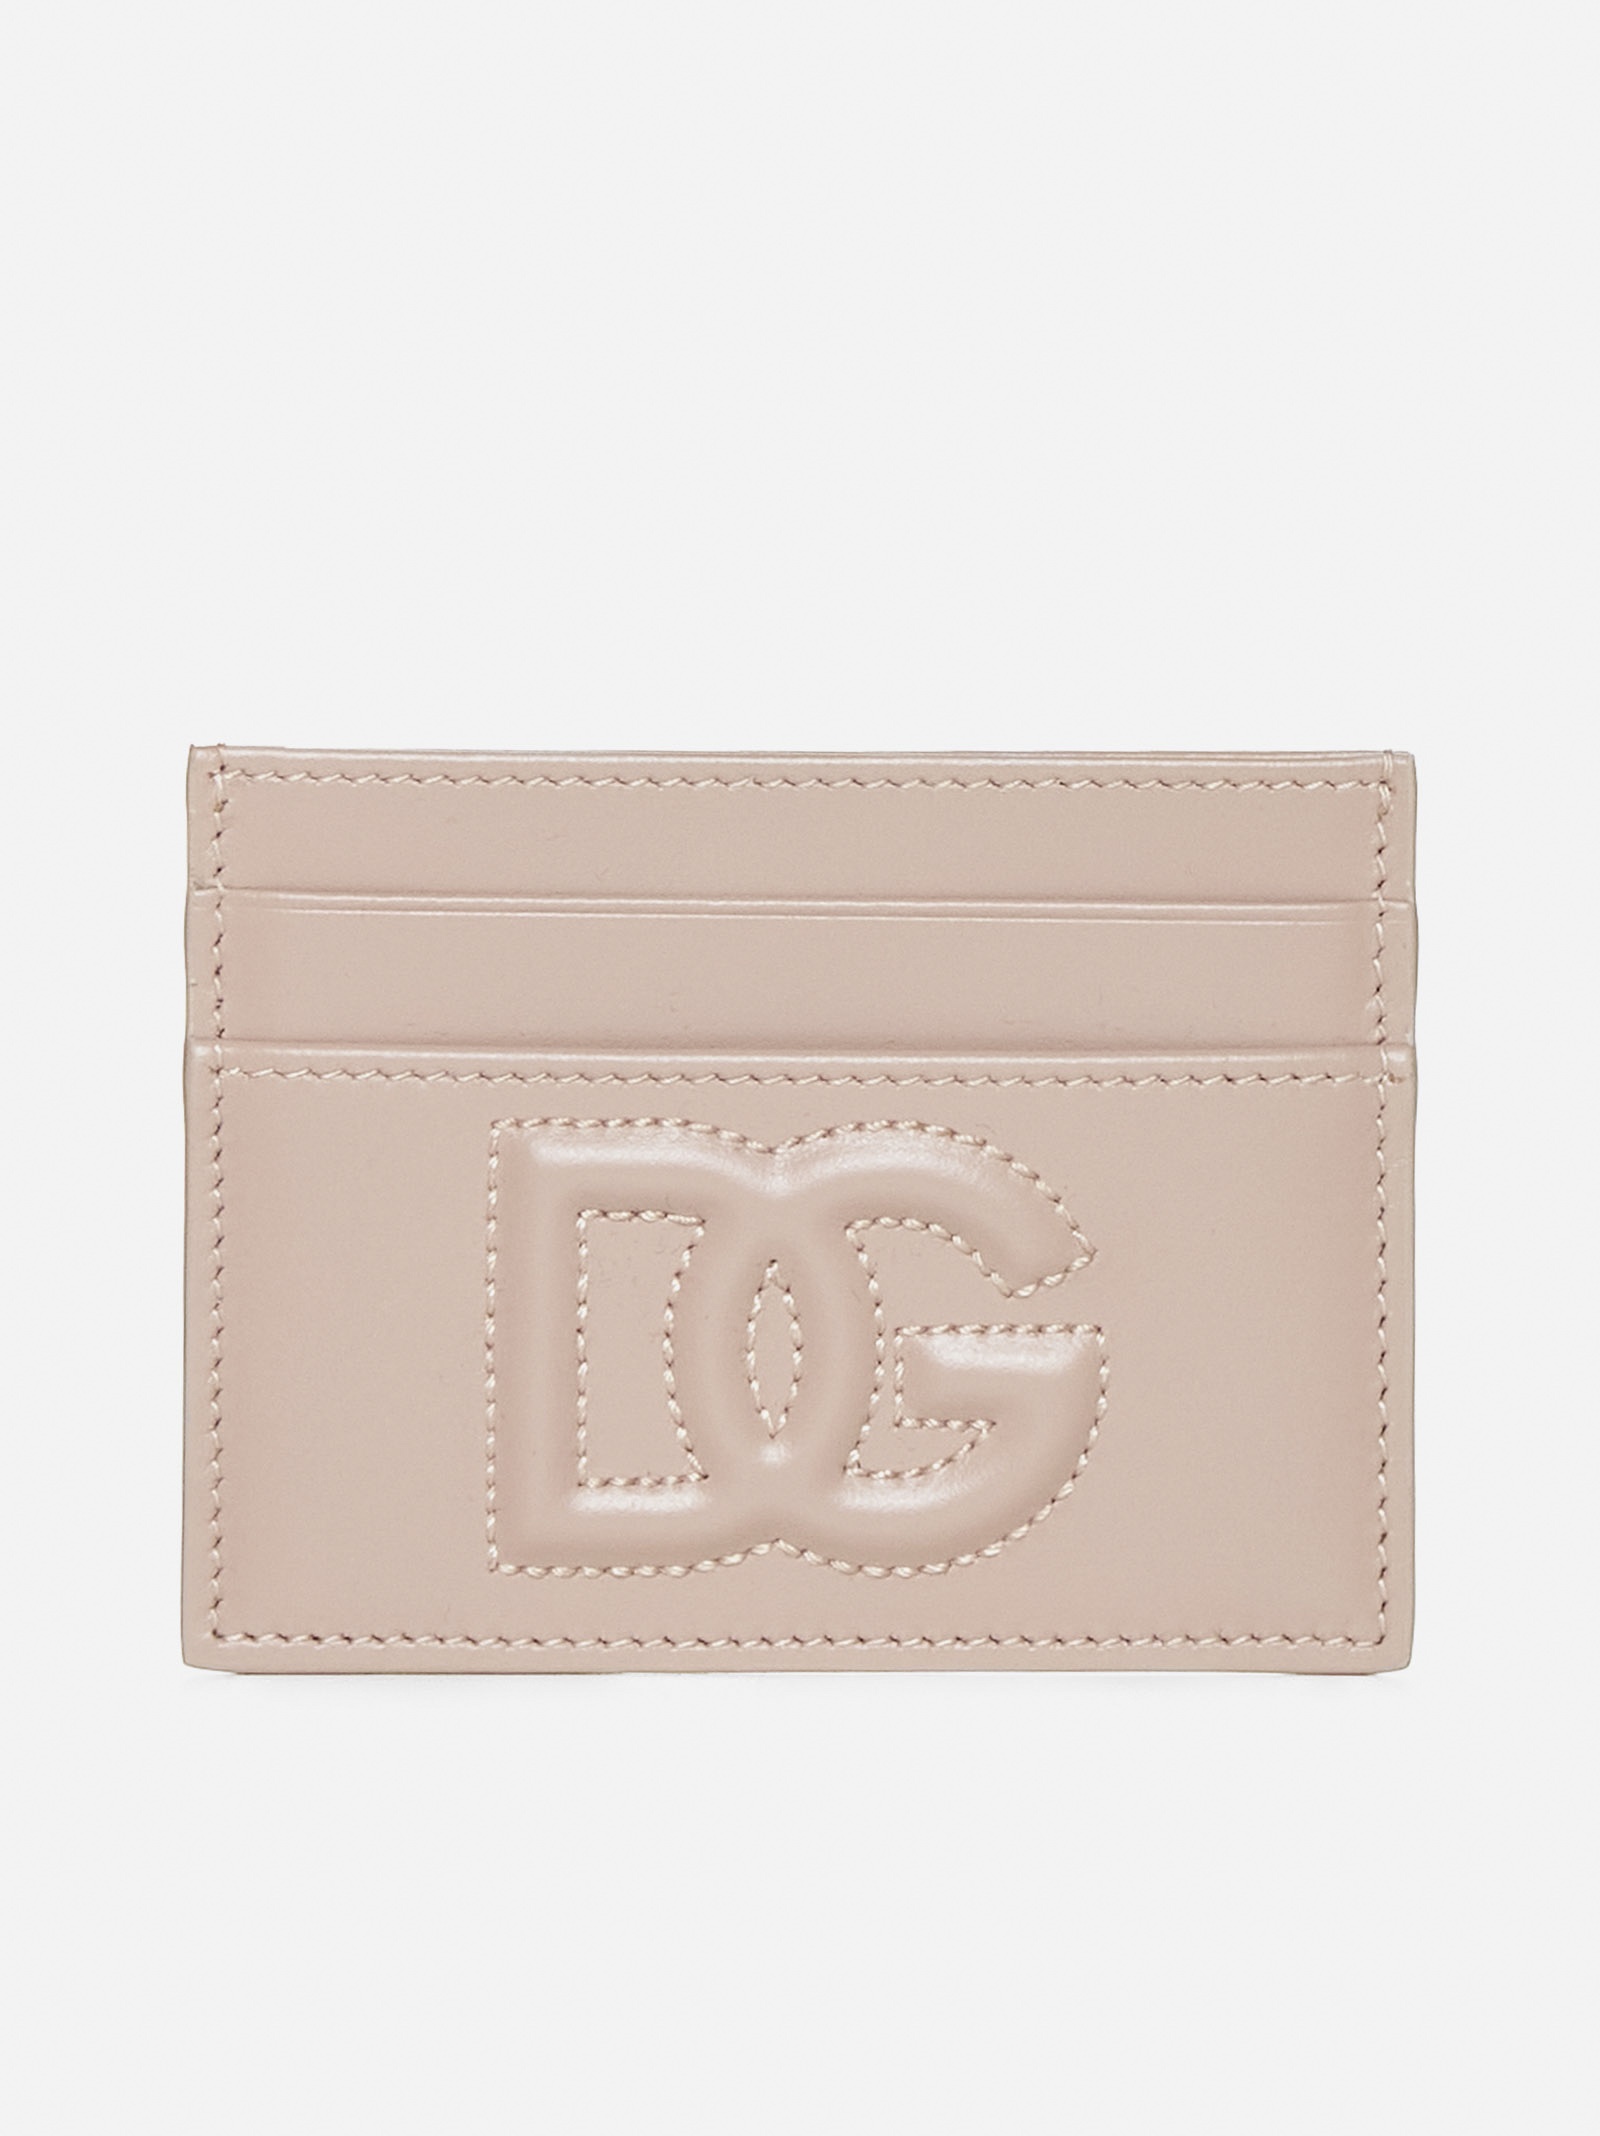 DG logo leather card holder - 1